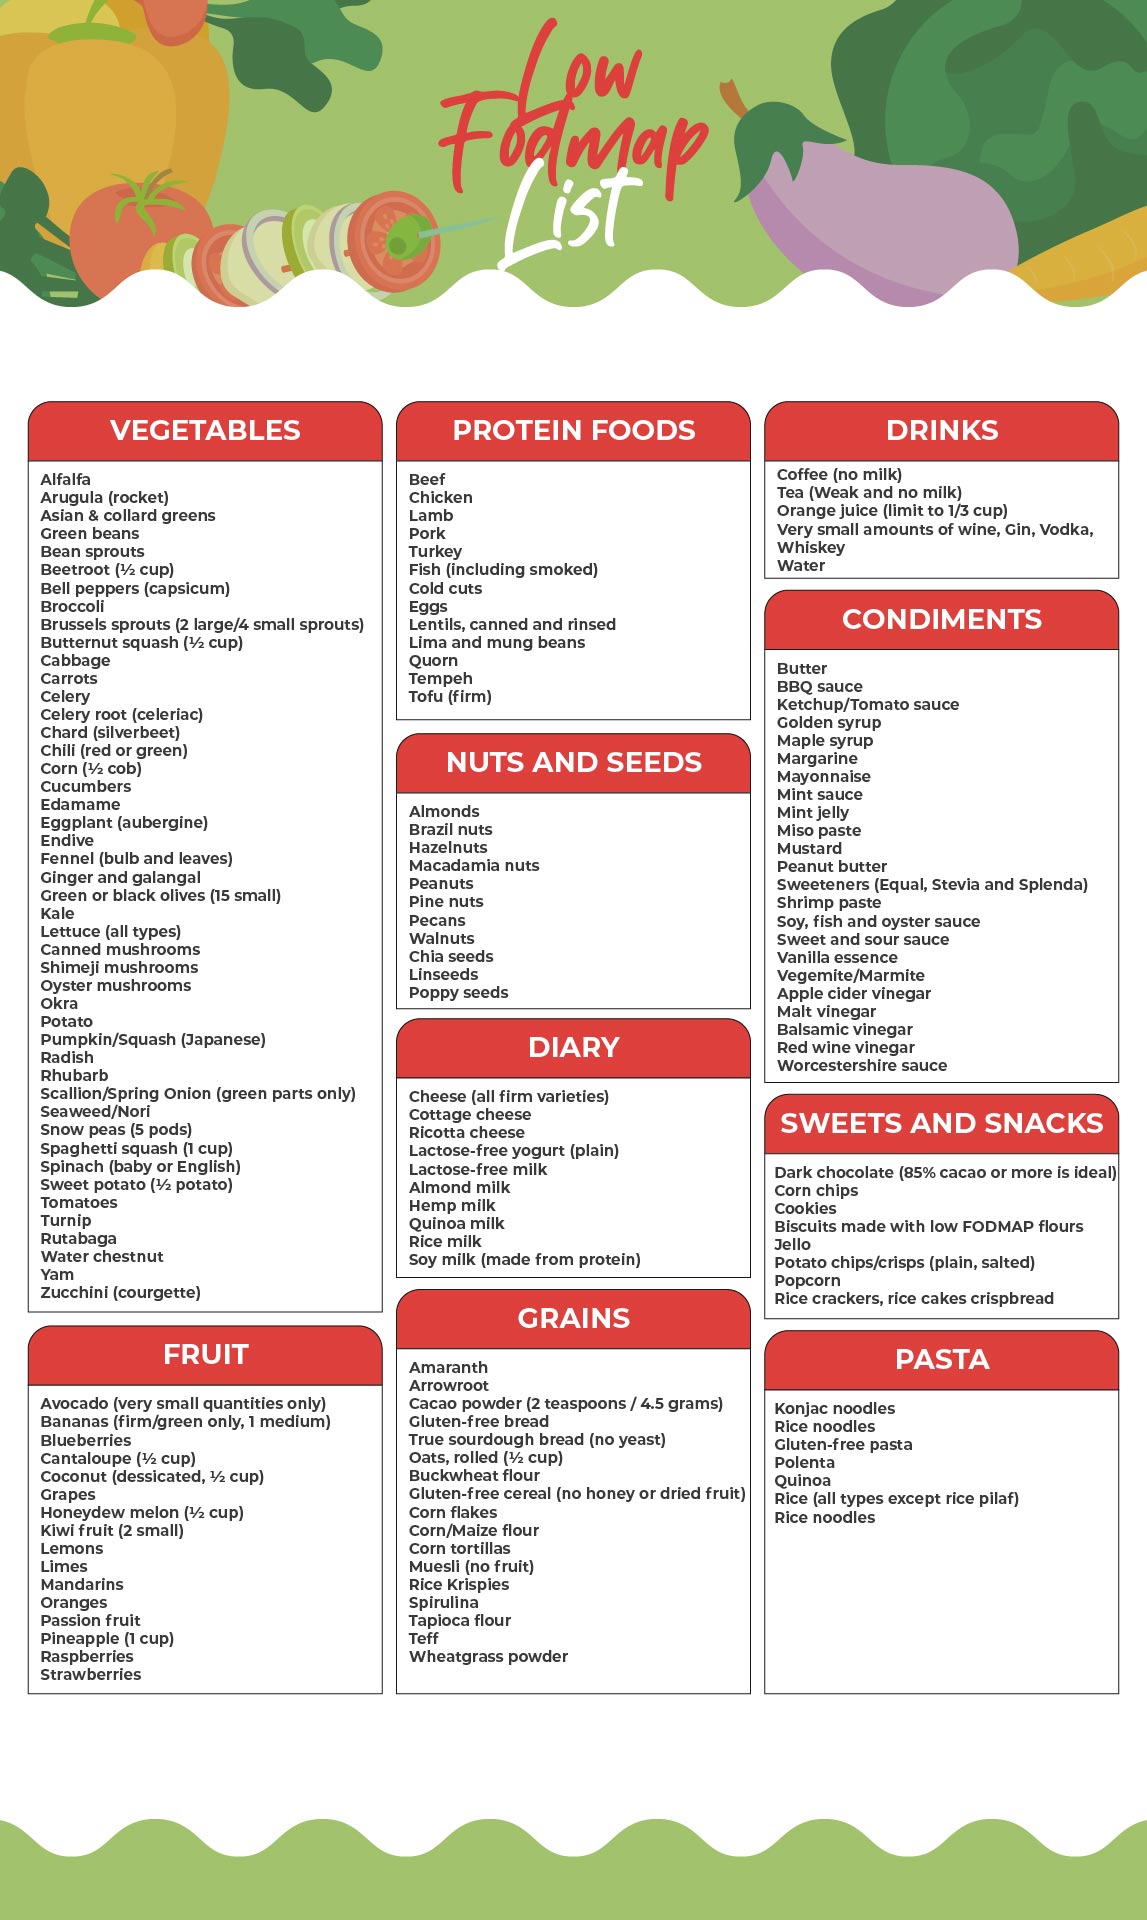 FODMAP Diet Food List